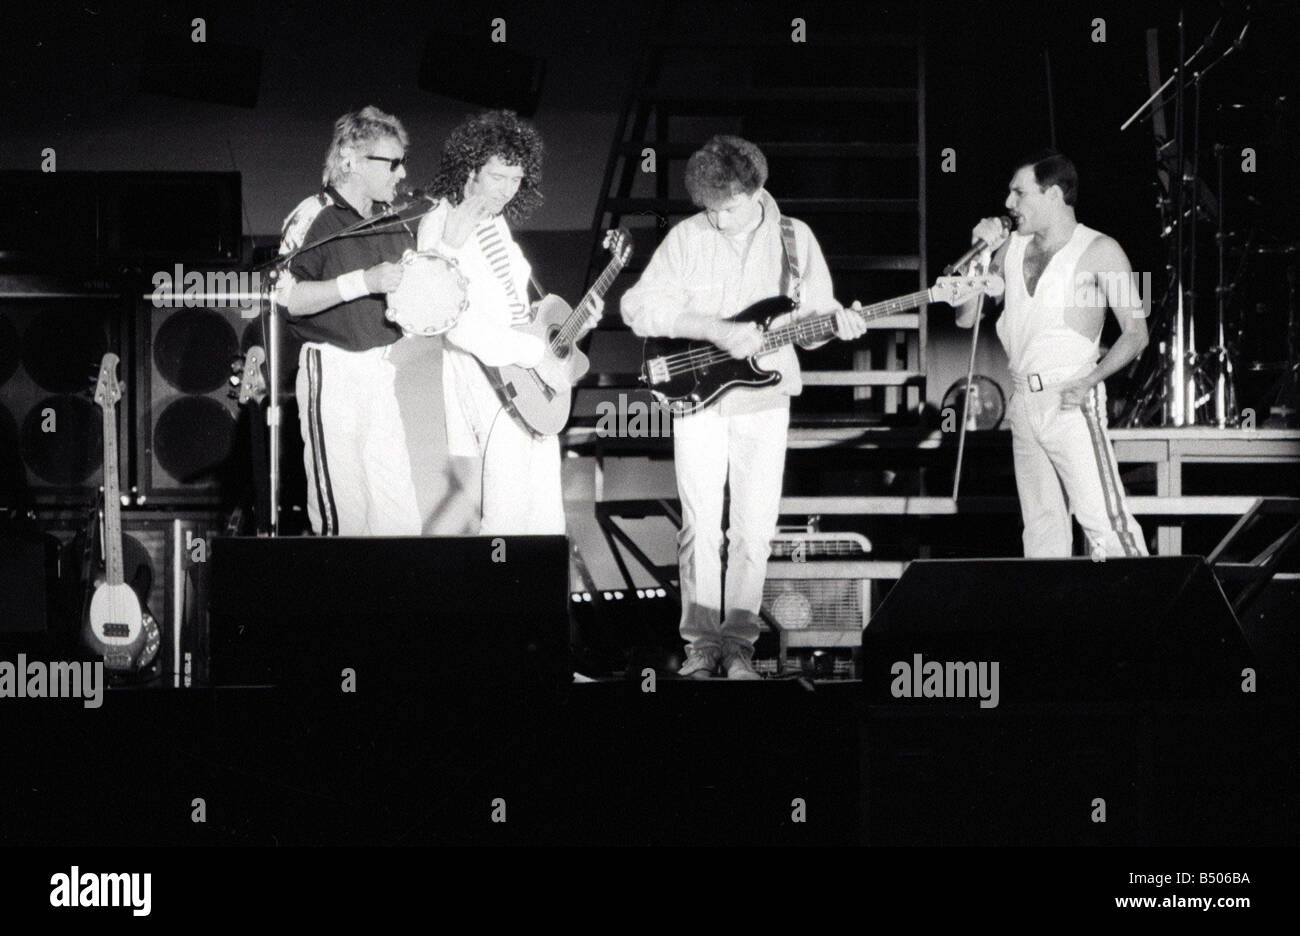 Queen Photos  Queen, Music, Freddie Mercury, Brian May, Roger